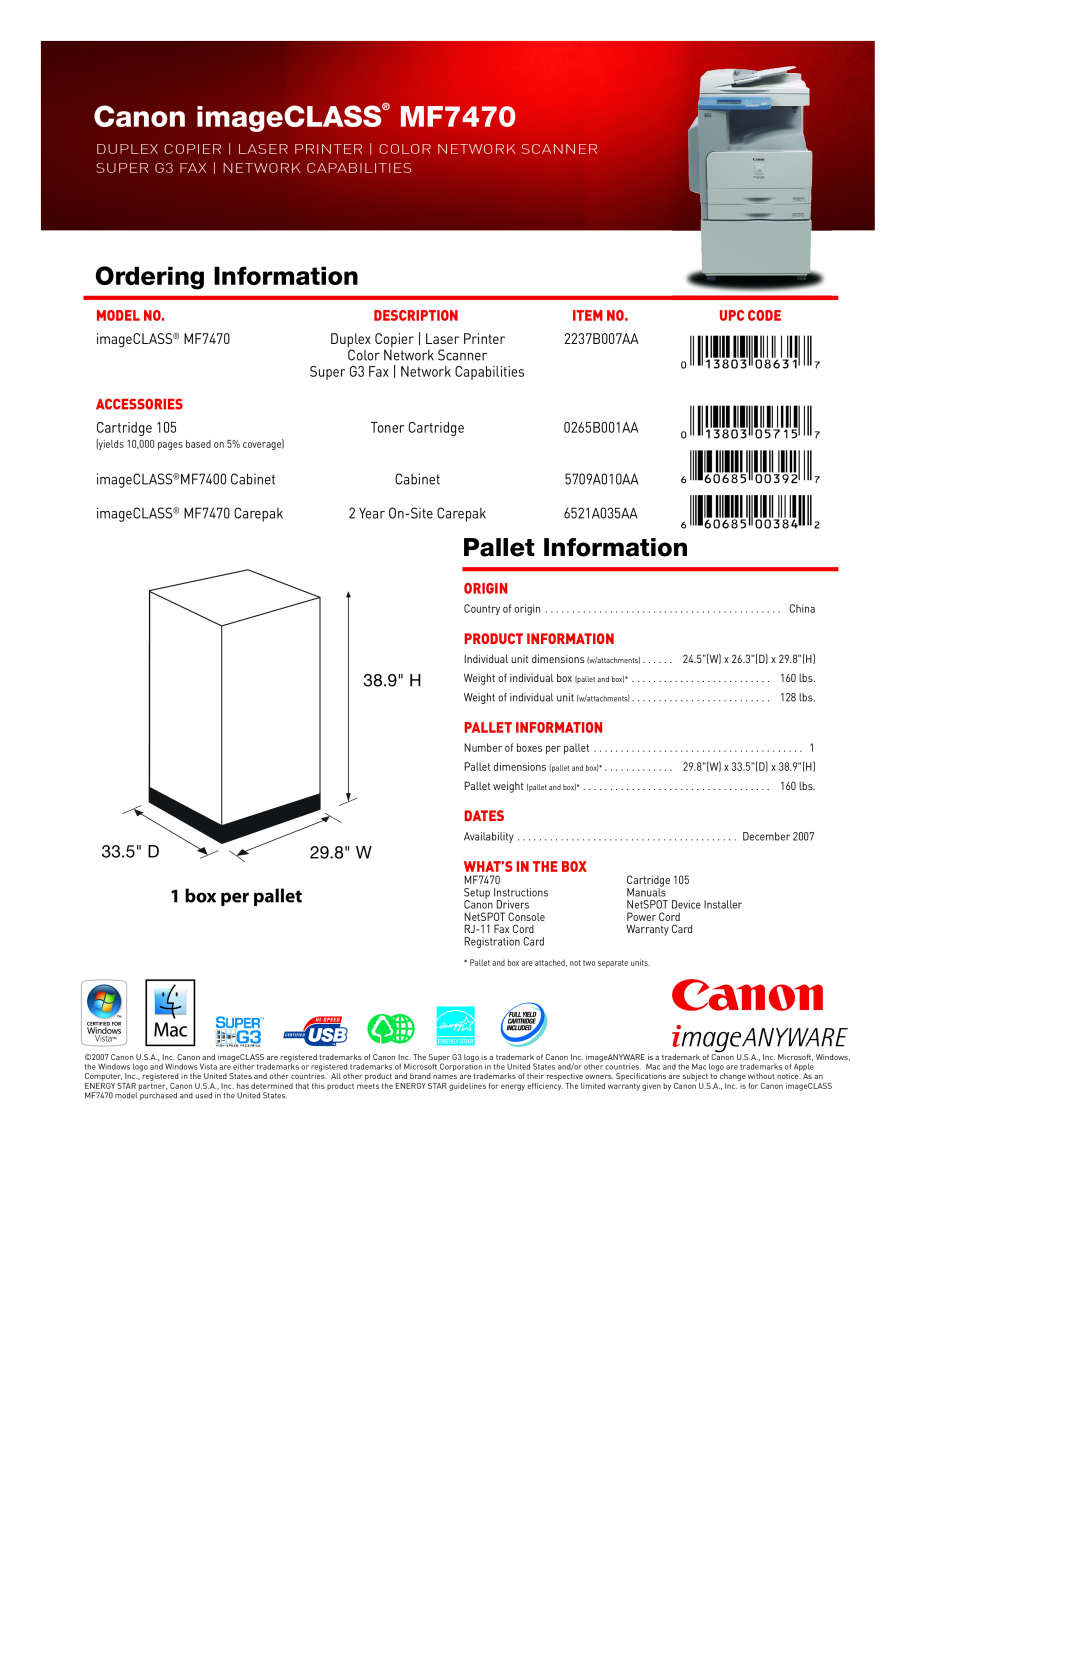 Canon 2237B007AA Ordering Information, Pallet Information, Canon imageCLASS MF7470, box per pallet, 33.5 D, 29.8 W, Origin 